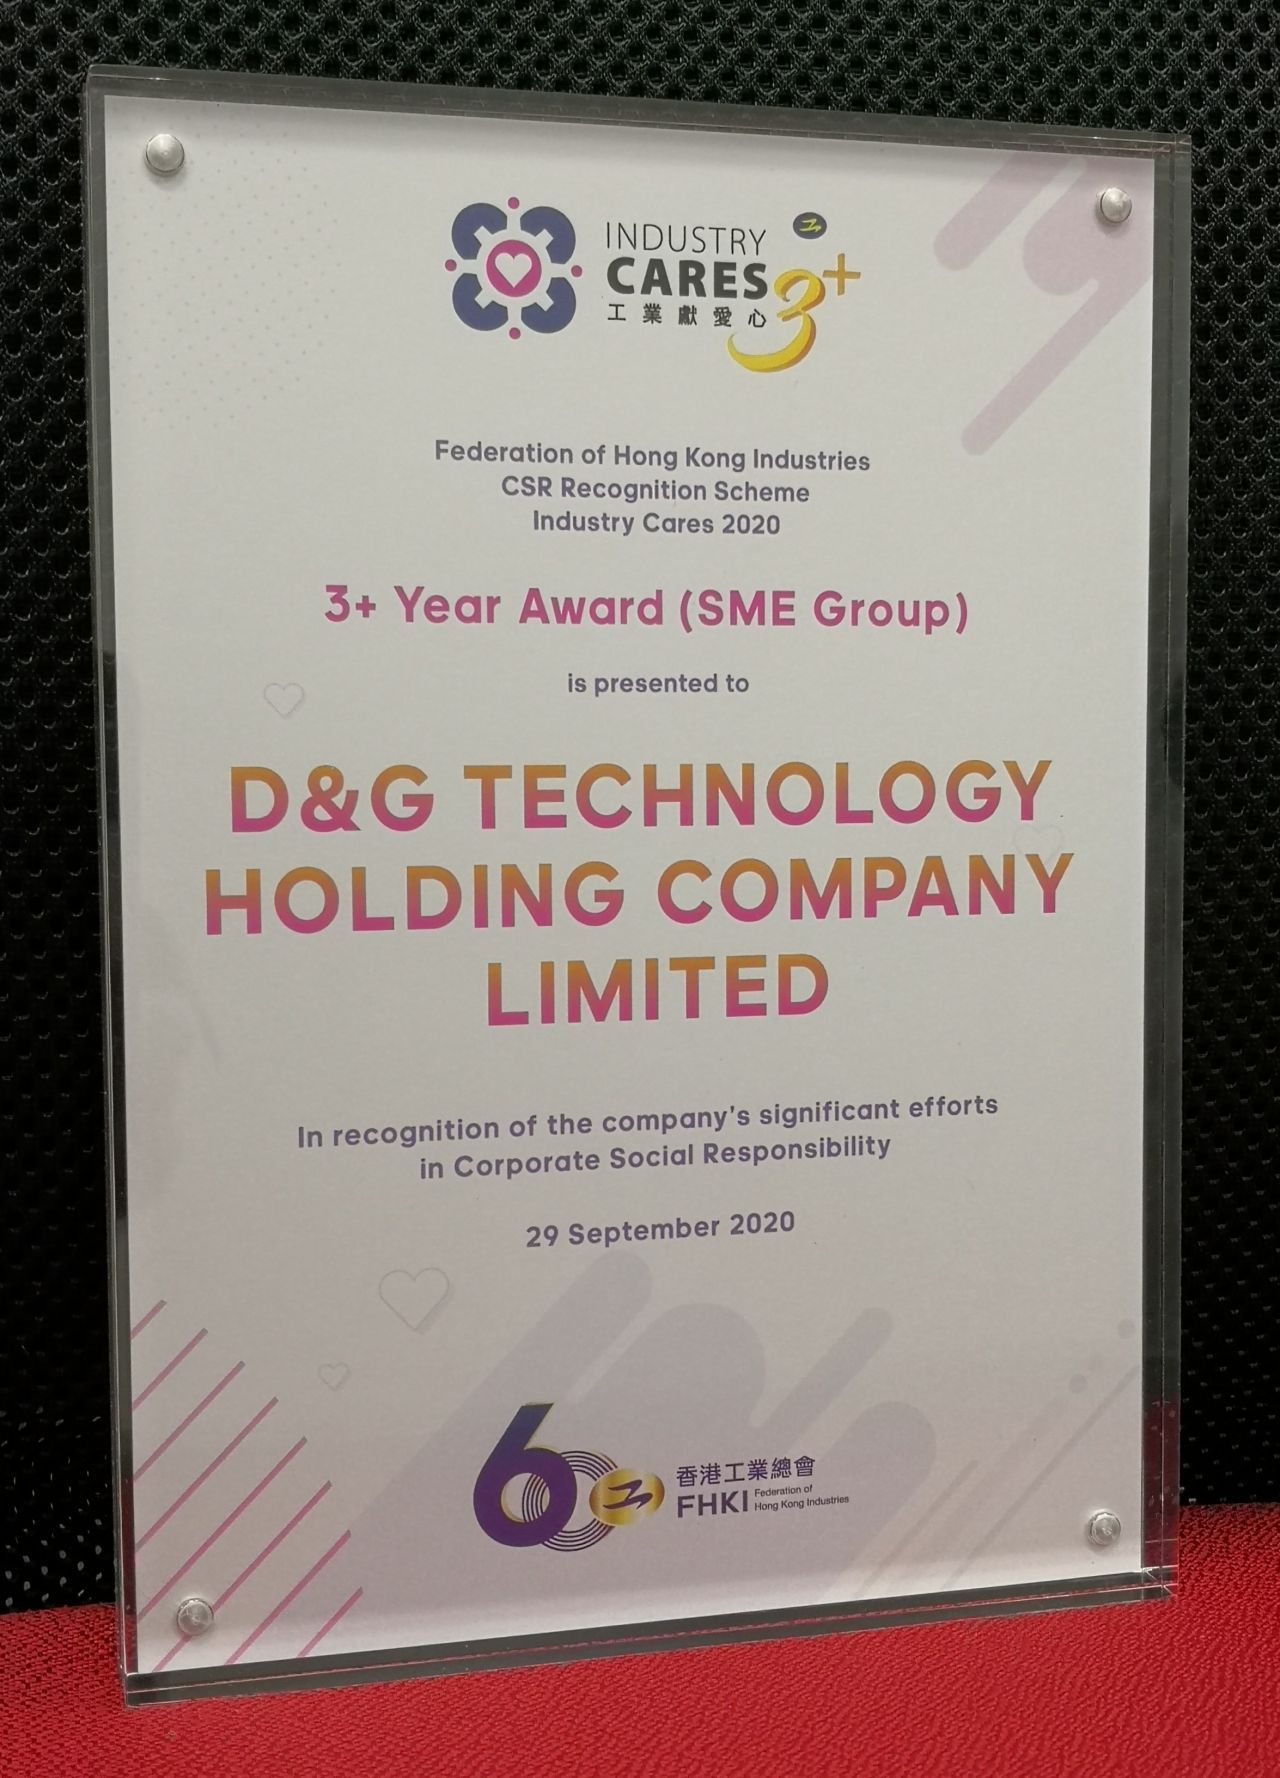 D&G Technology D&G Machinery награждена наградой Industry Cares 2020 за 3+ года